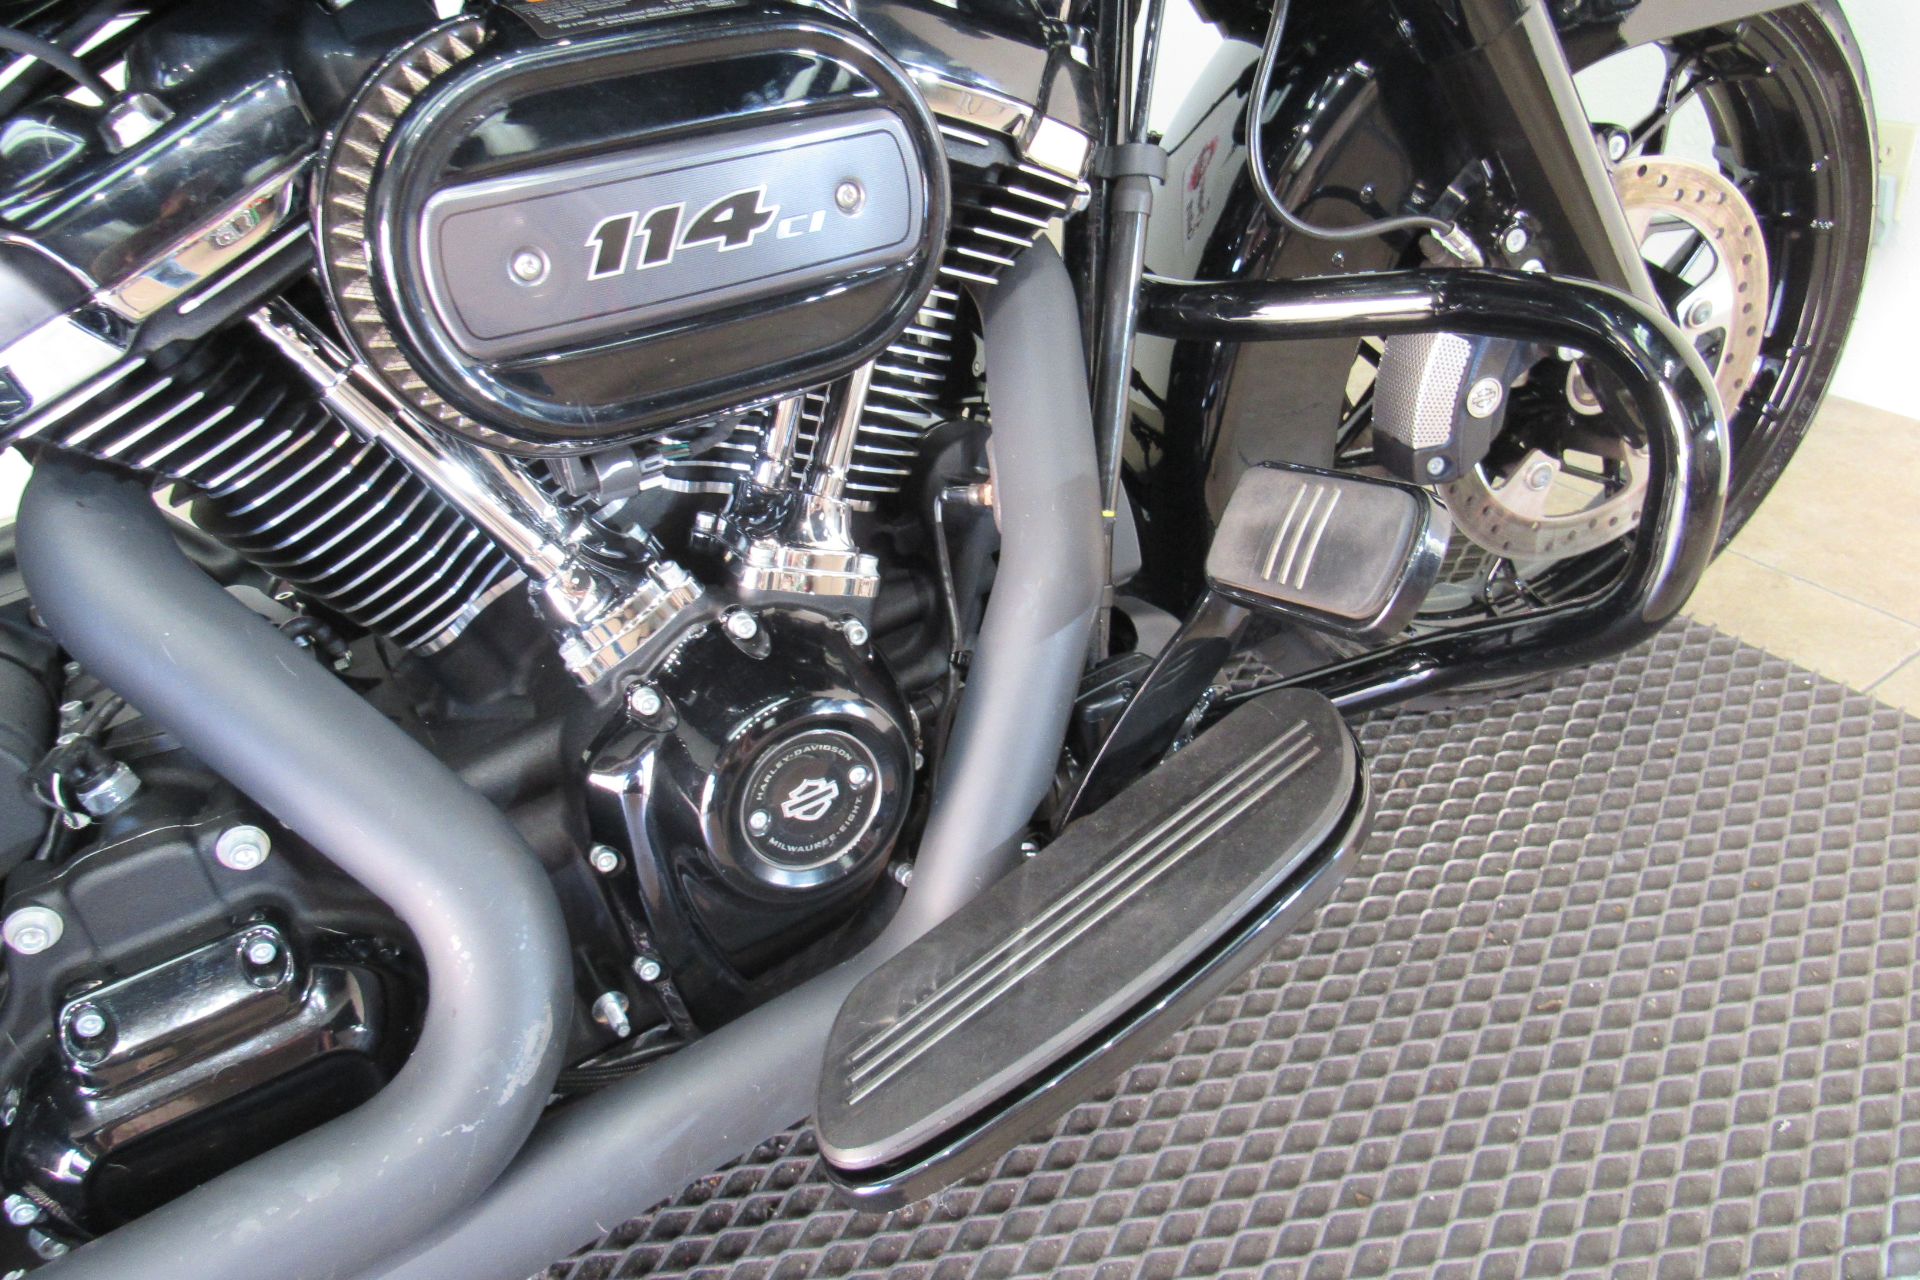 2021 Harley-Davidson Road Glide® Special in Temecula, California - Photo 13